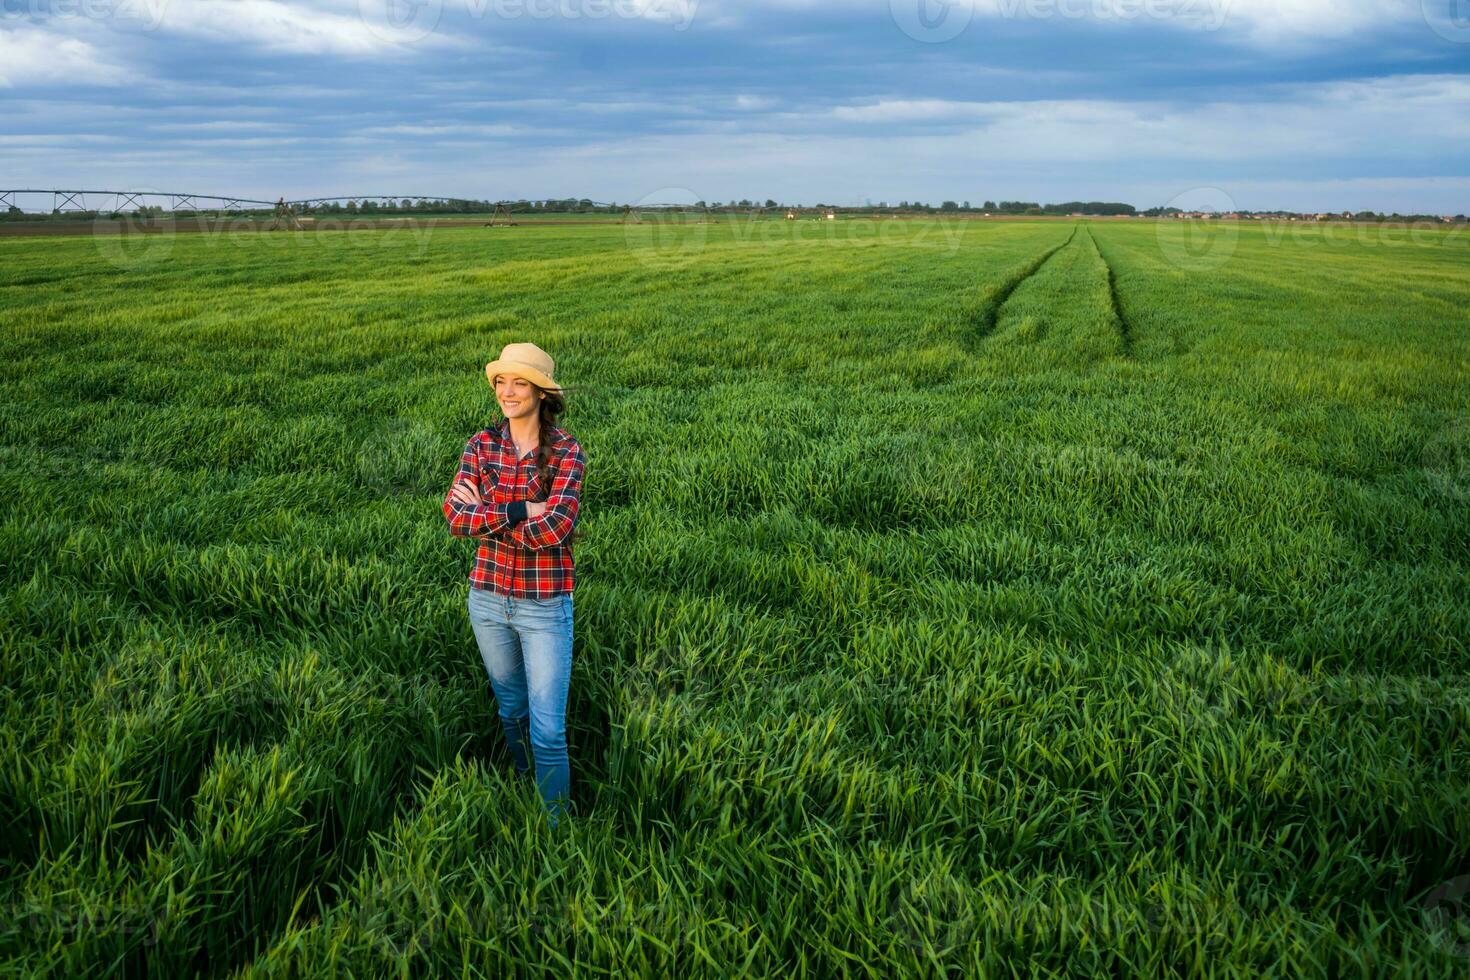 A farmer standing in a barley field photo